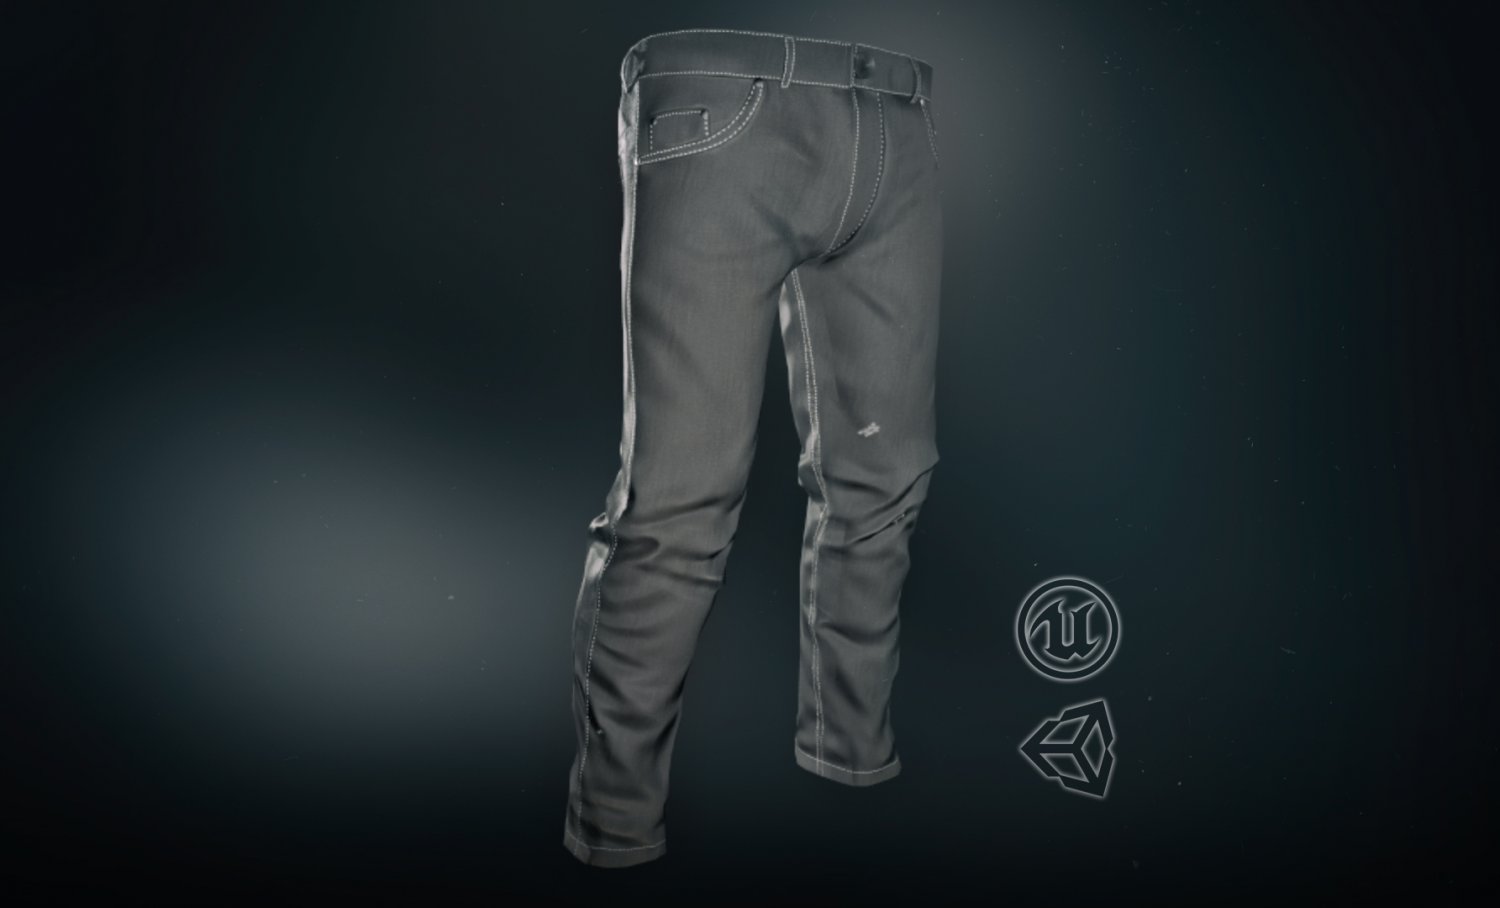 Jean gray3. Clo3d Jeans. Джинсы 3d модель. 3д модель джинсов. L;bycs d 3l.